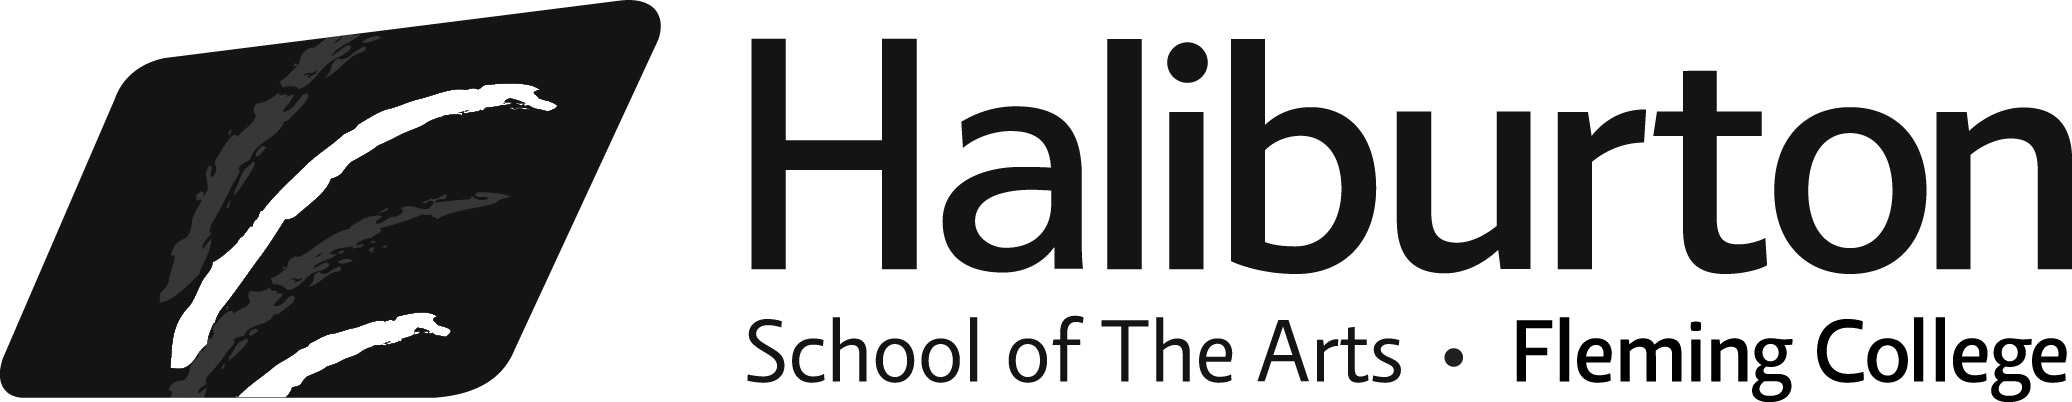 Haliburton LogoBlkWht